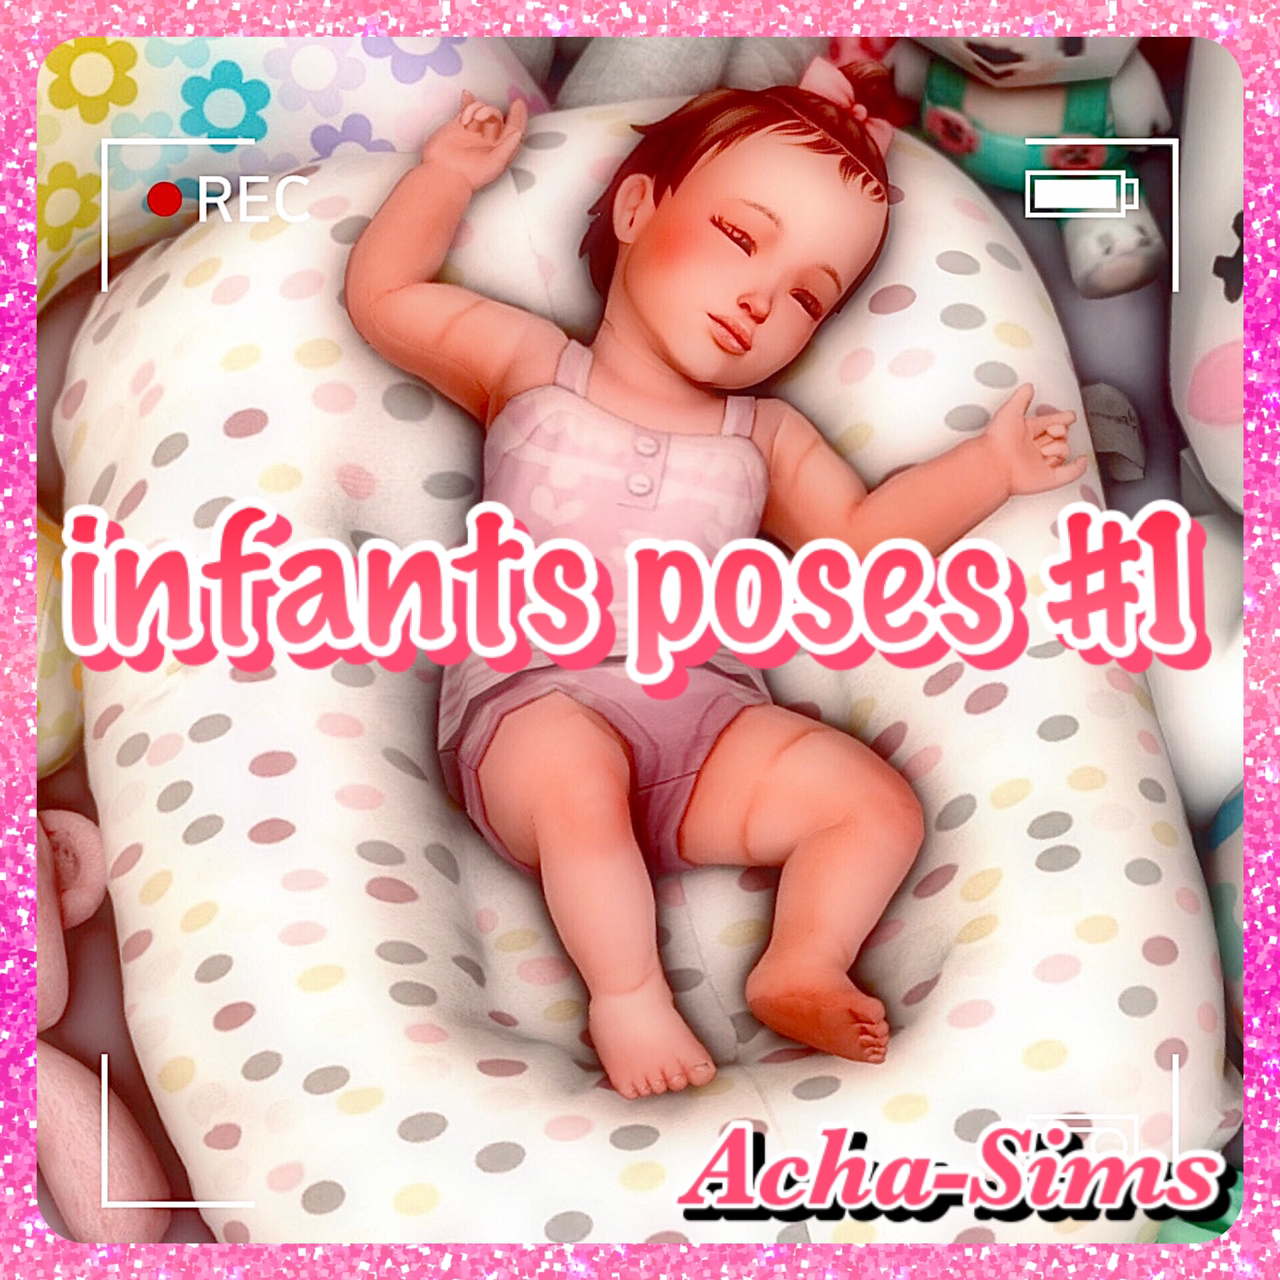 Acha infants poses #1 (single) project avatar